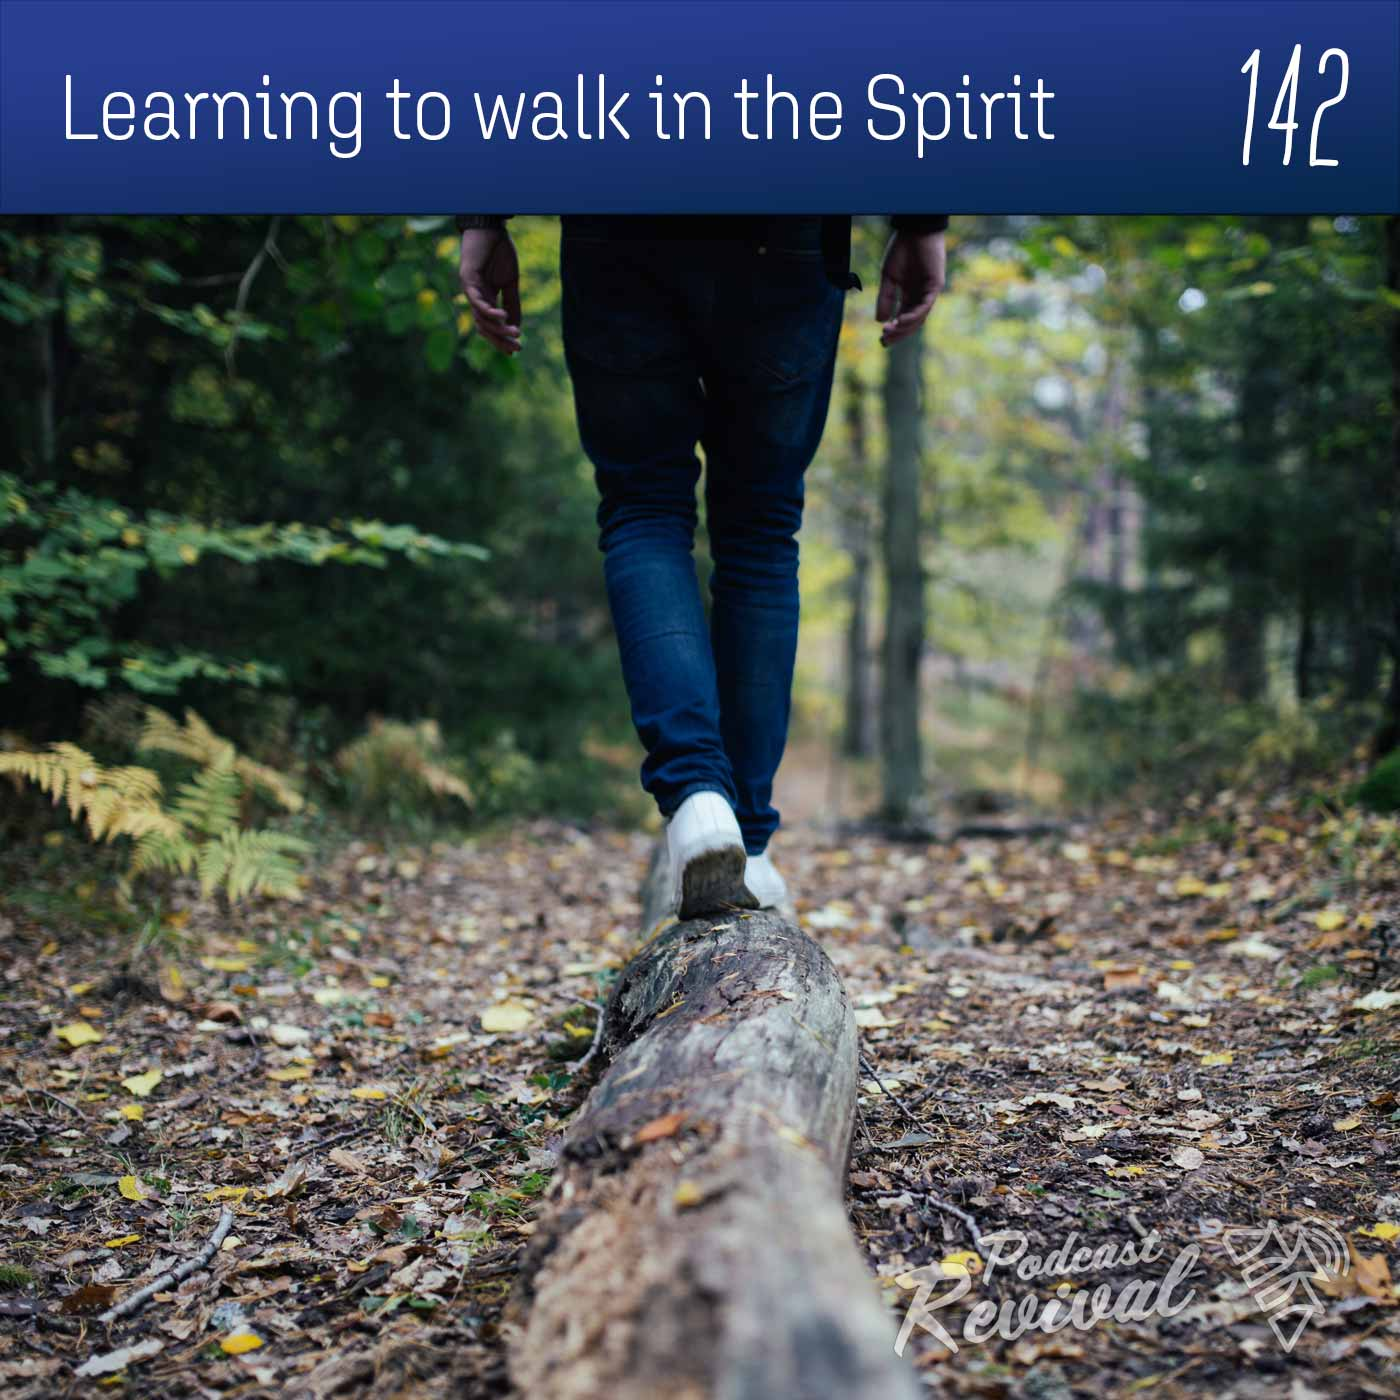 Learning to walk in the Spirit - Pr Simon Pearce - 142